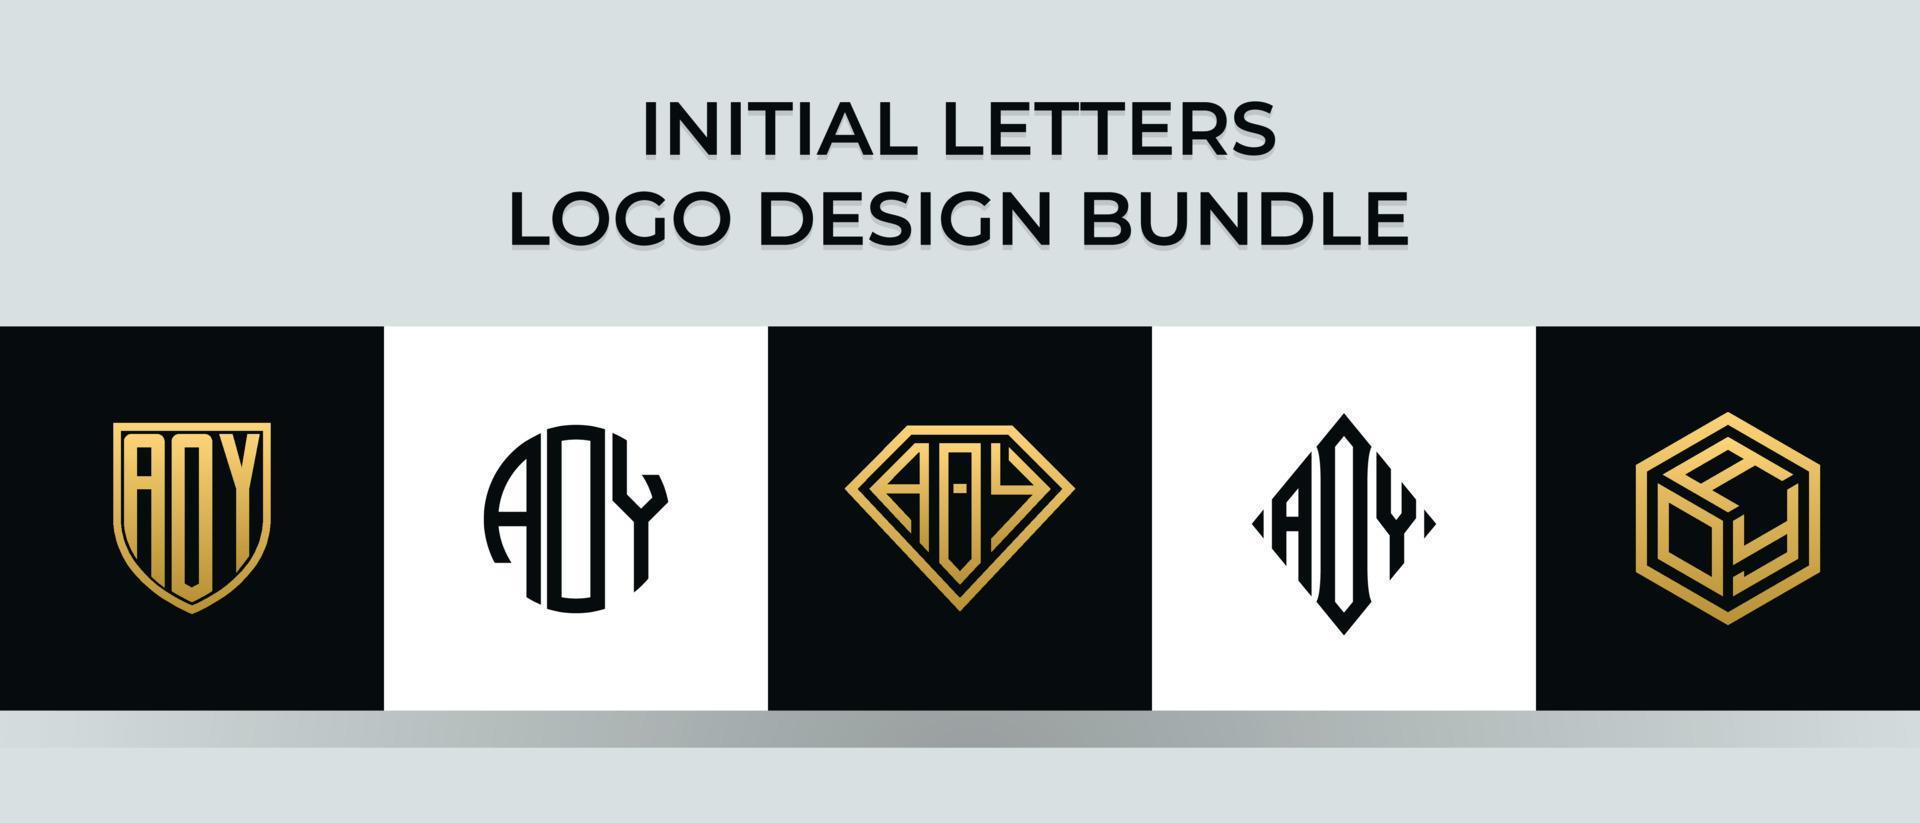 letras iniciales aoy logo diseños paquete vector